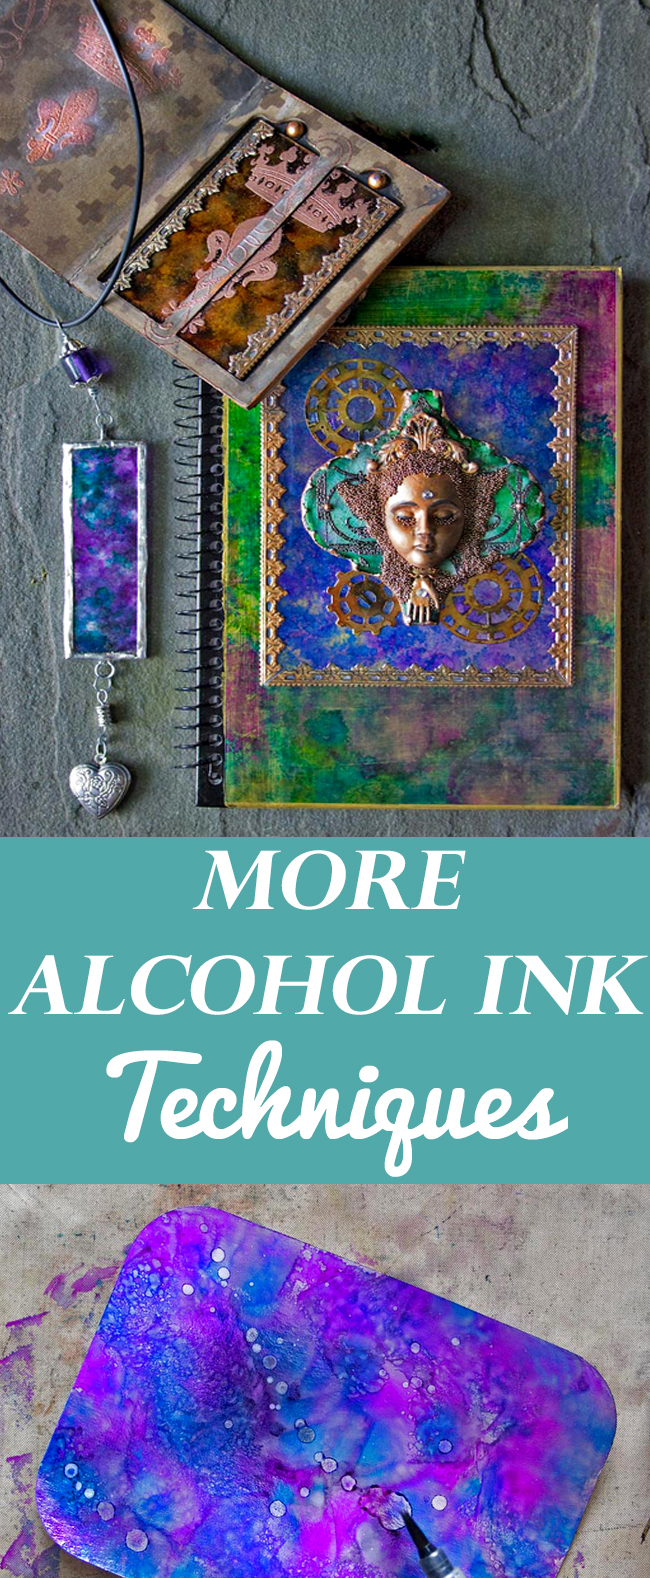 More Alcohol Ink Techniques